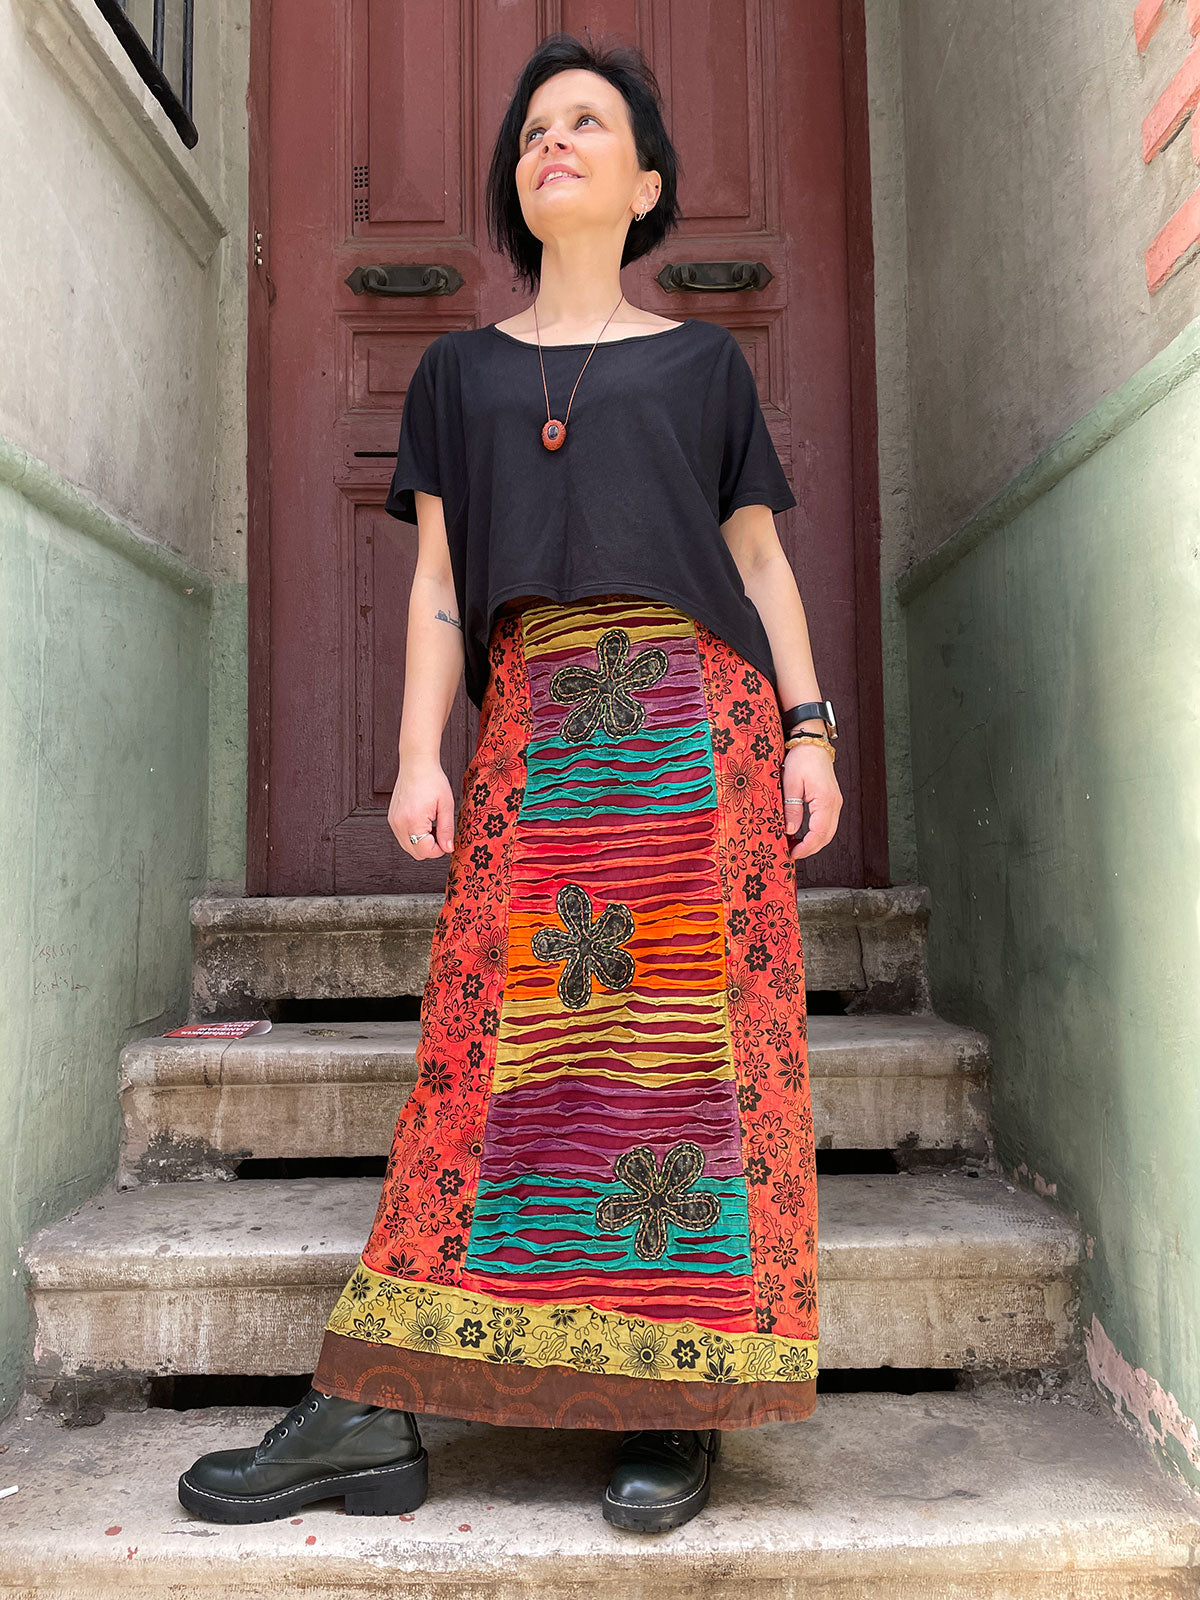 RISING INTERNATIONAL NEPAL Handmade LONG SKIRT or DRESS Multi-Color  PATCHWORK | eBay